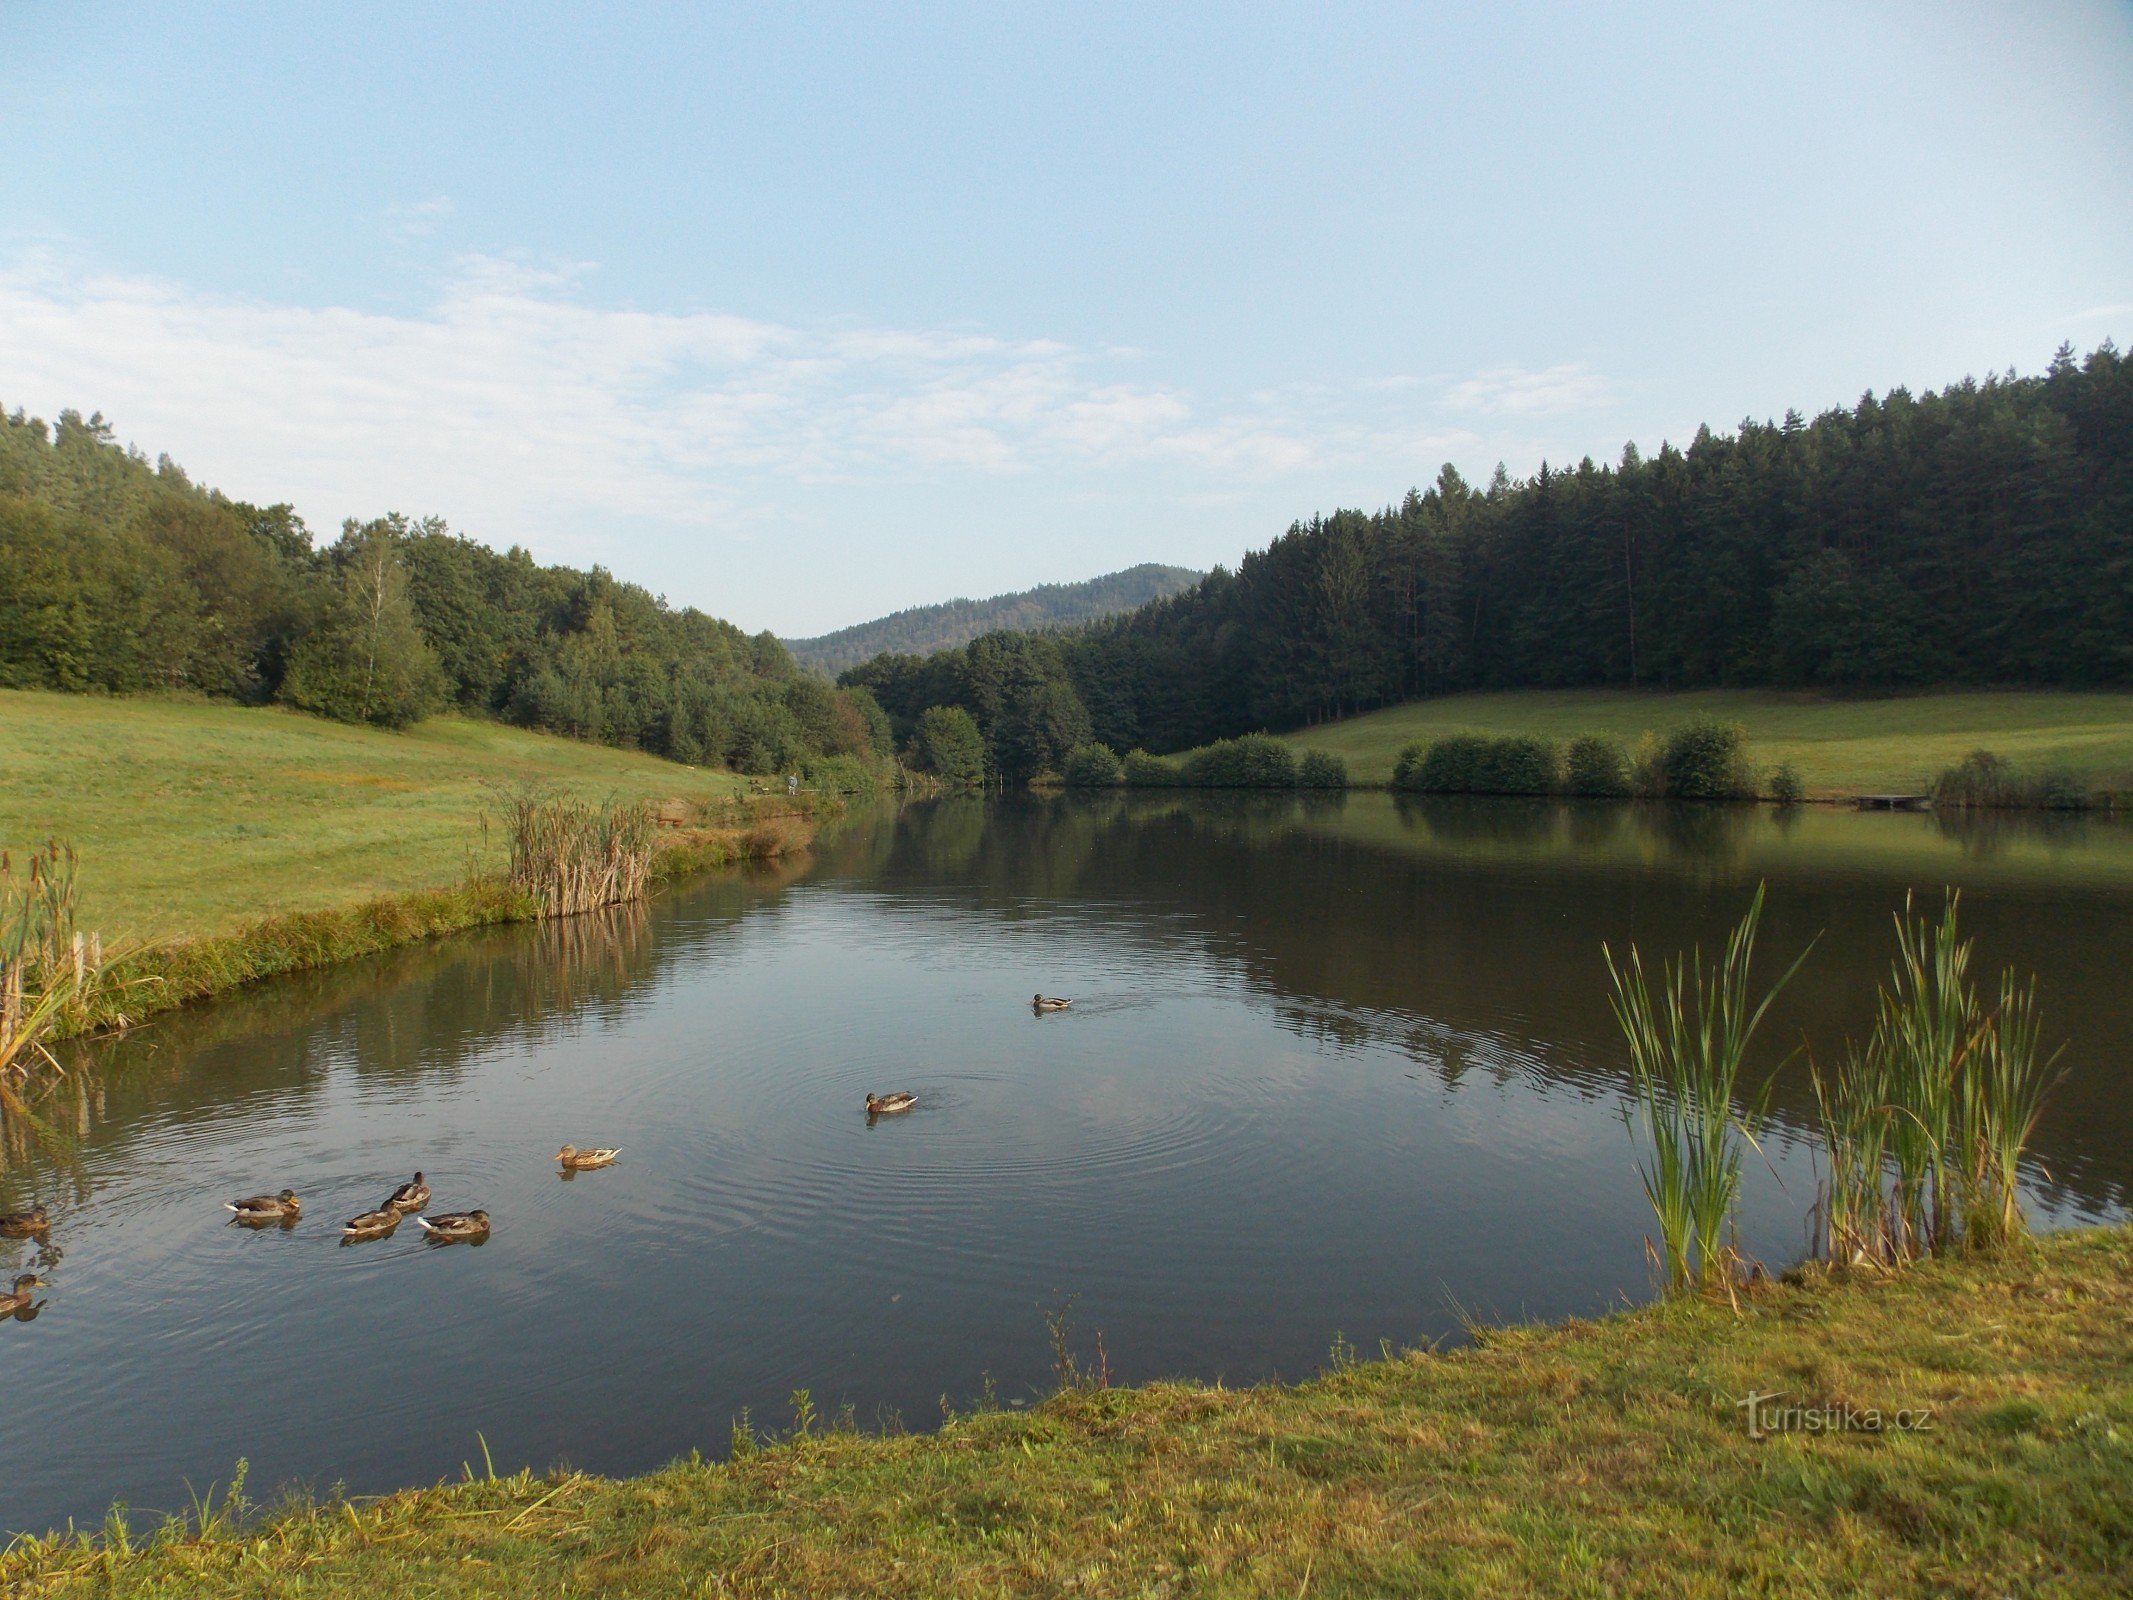 Rybník - Piękna martwa natura w pobliżu Újezd ​​​​w pobliżu Valašské Klobouk